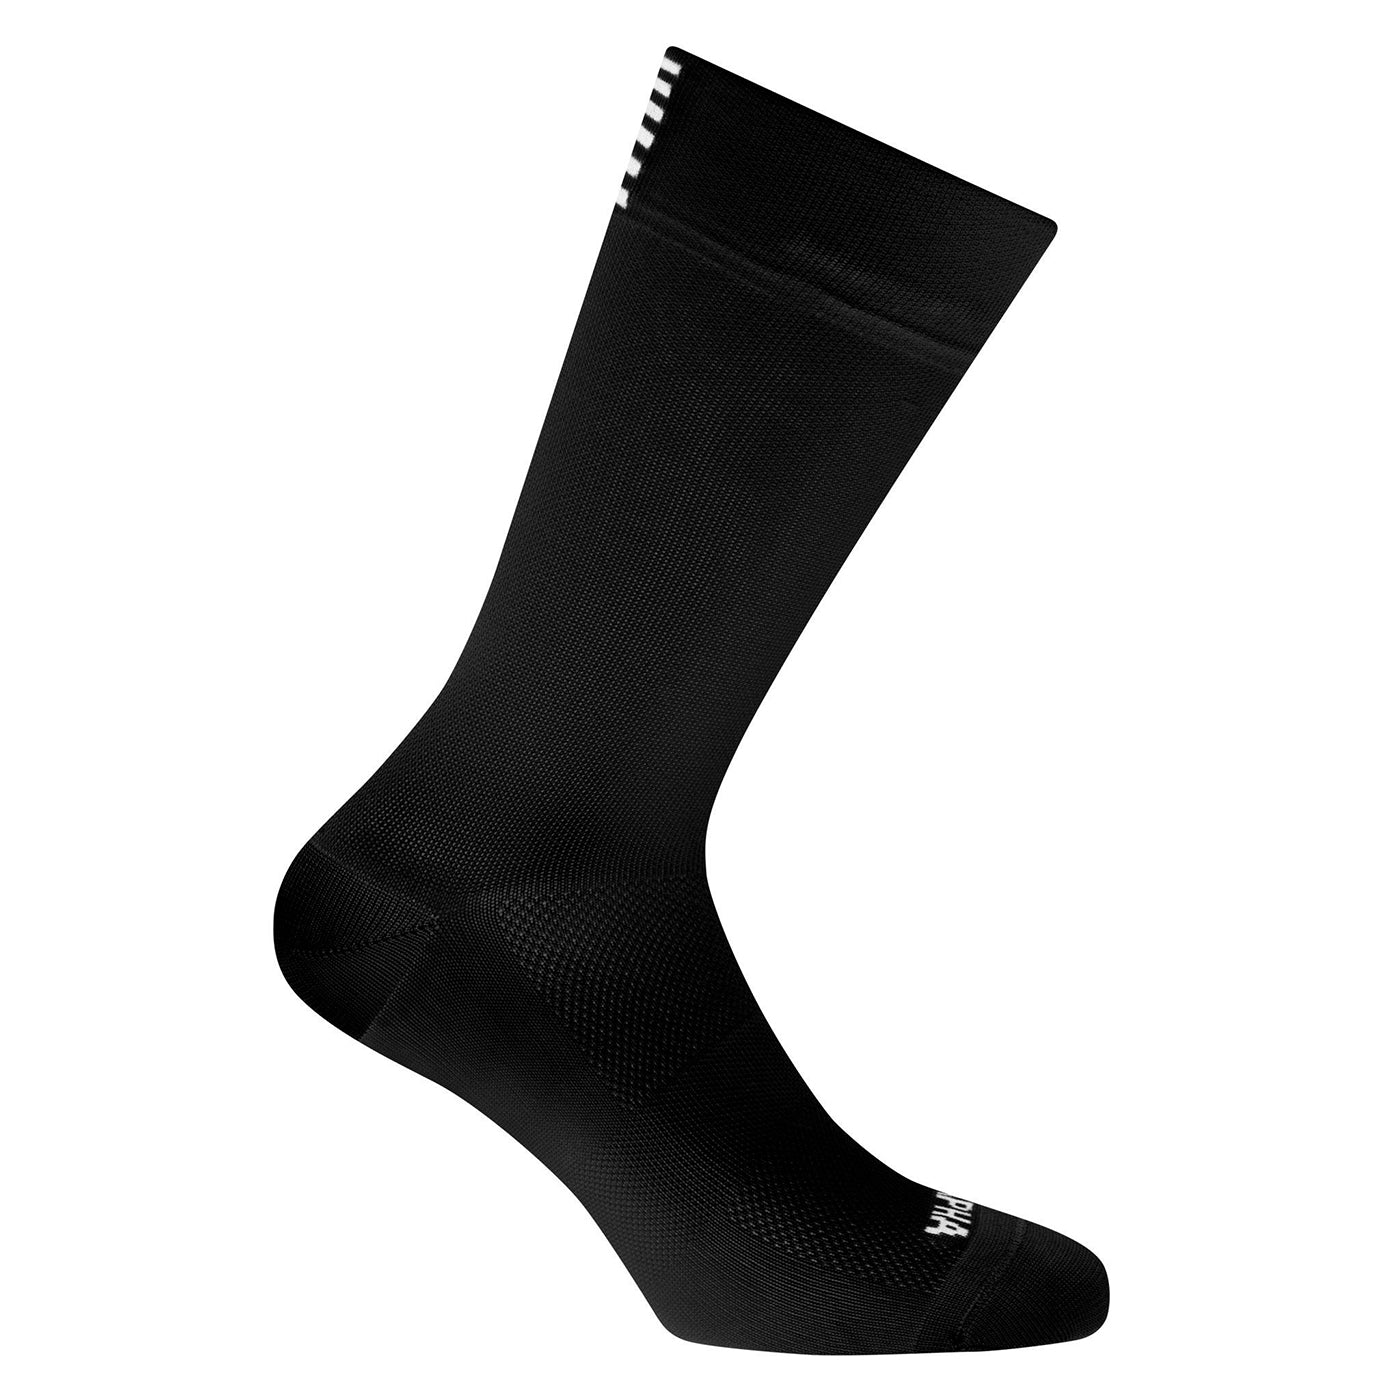 Rapha Pro Team Extra Long socks - Black | All4cycling